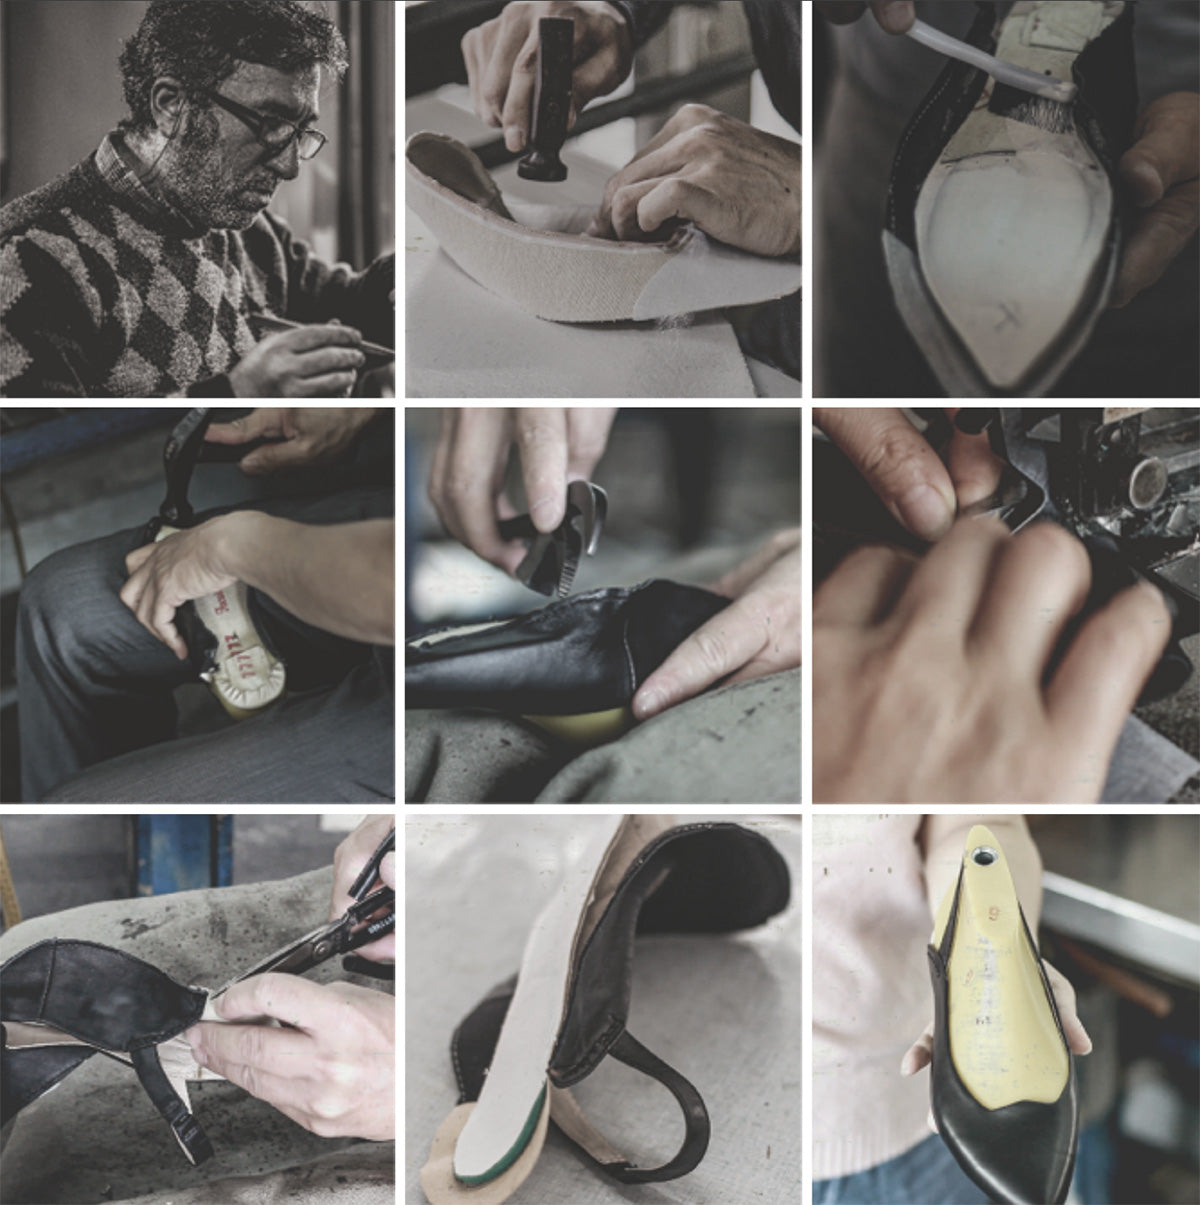 luxury women's sacchetto shoes collage